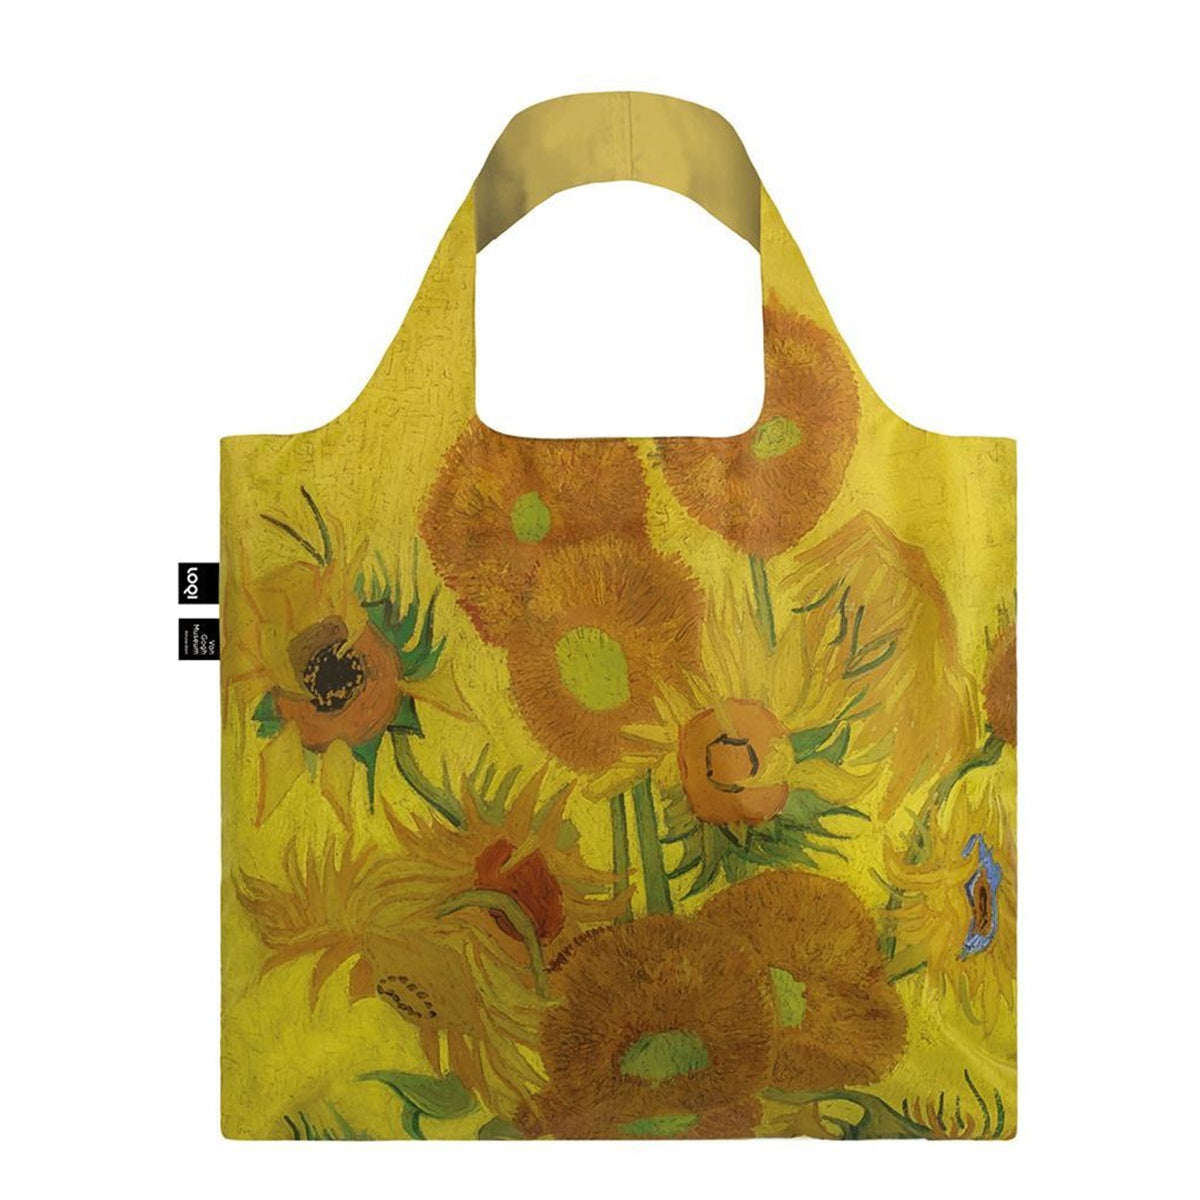 LOQI Museum Vincent Van Gogh's Sunflowers Reusable Shopping Bag